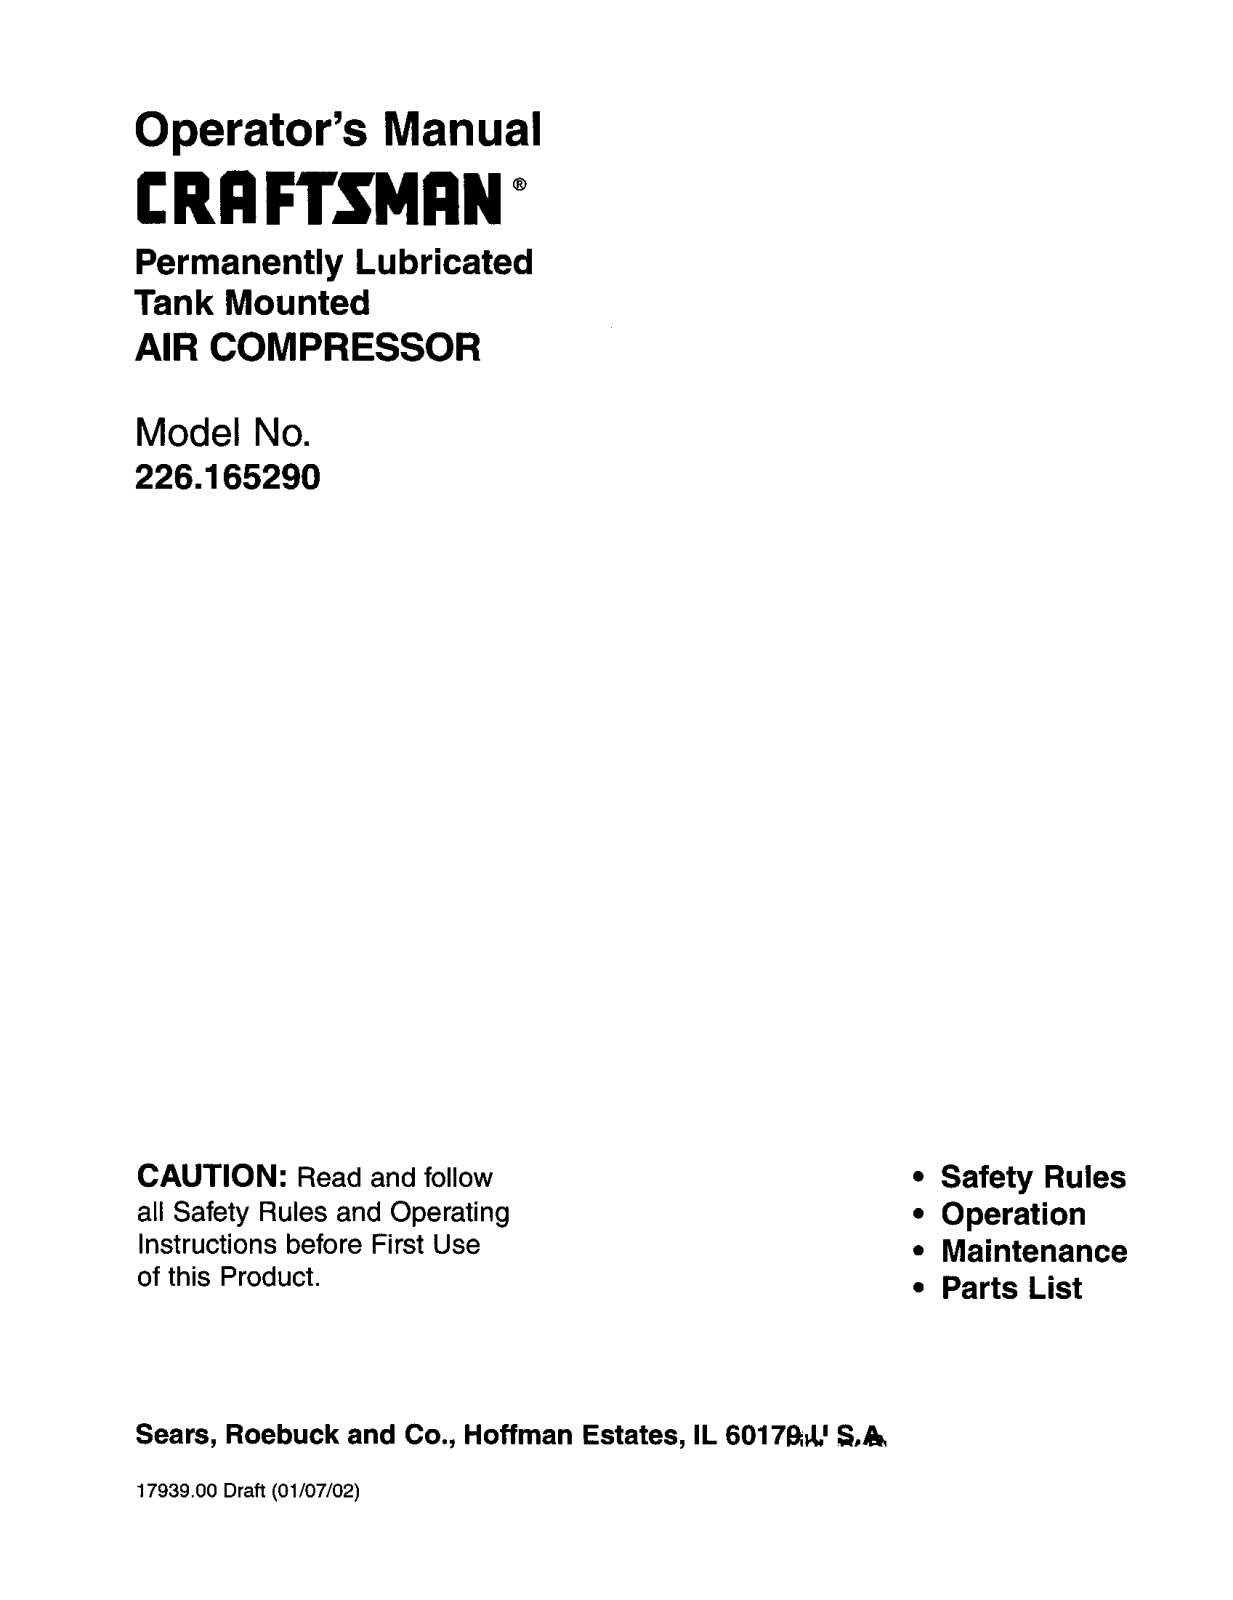 Craftsman 226165290 Owner’s Manual